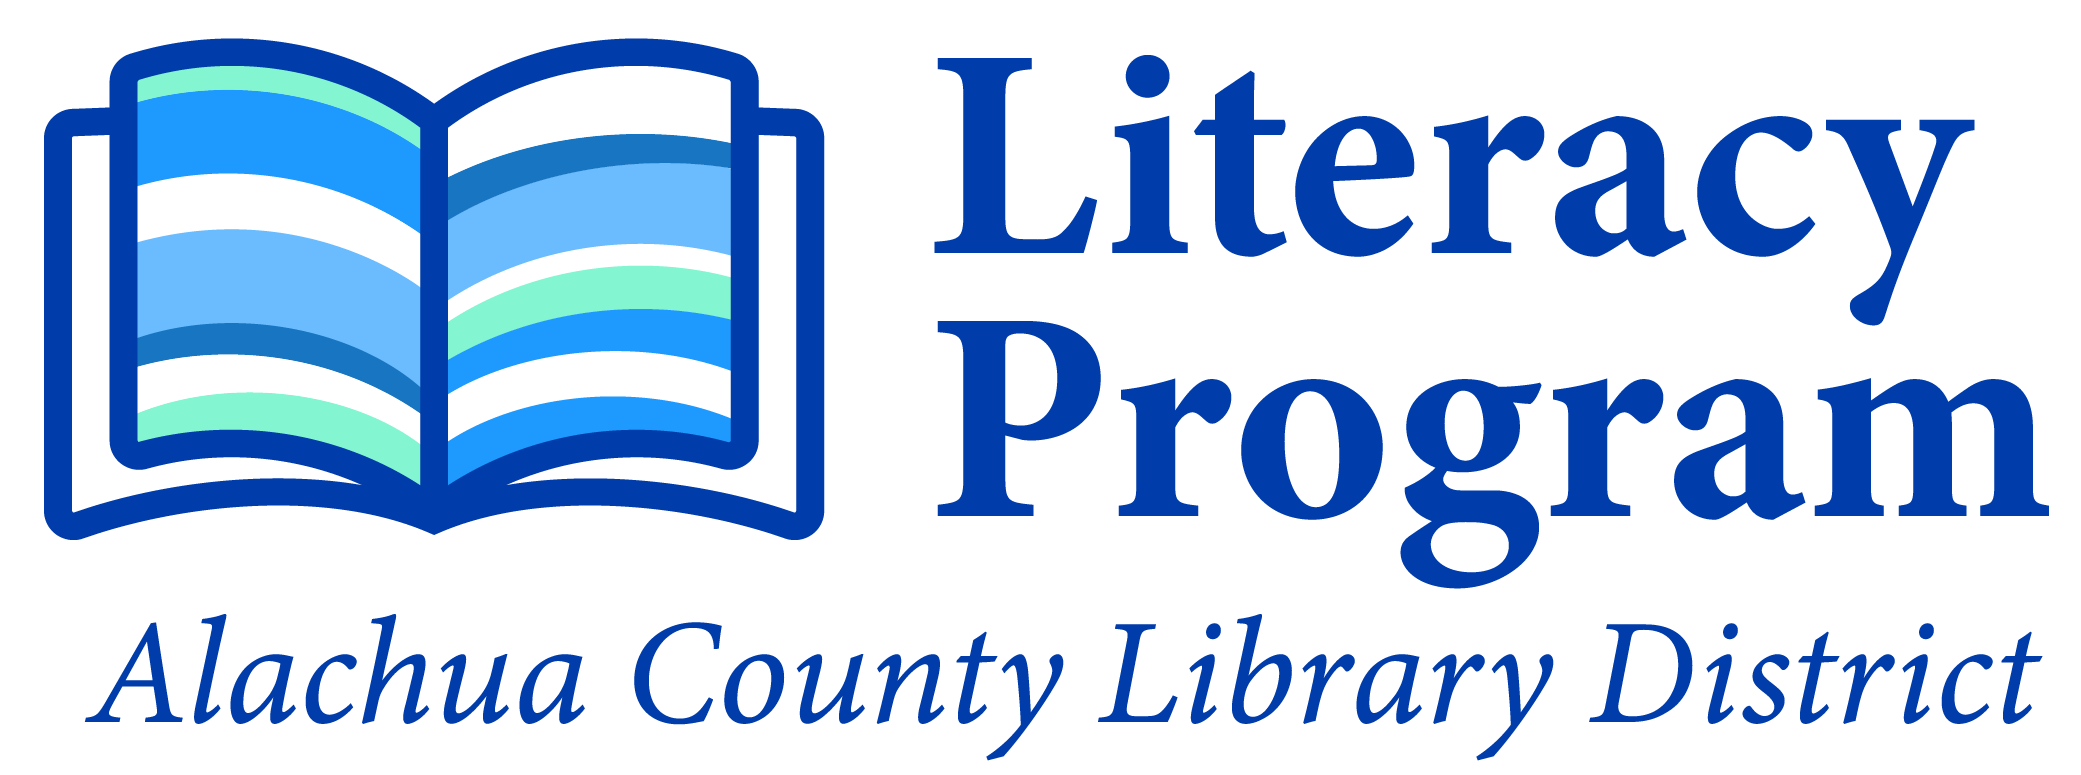 Alachua County Library Literacy Program logo